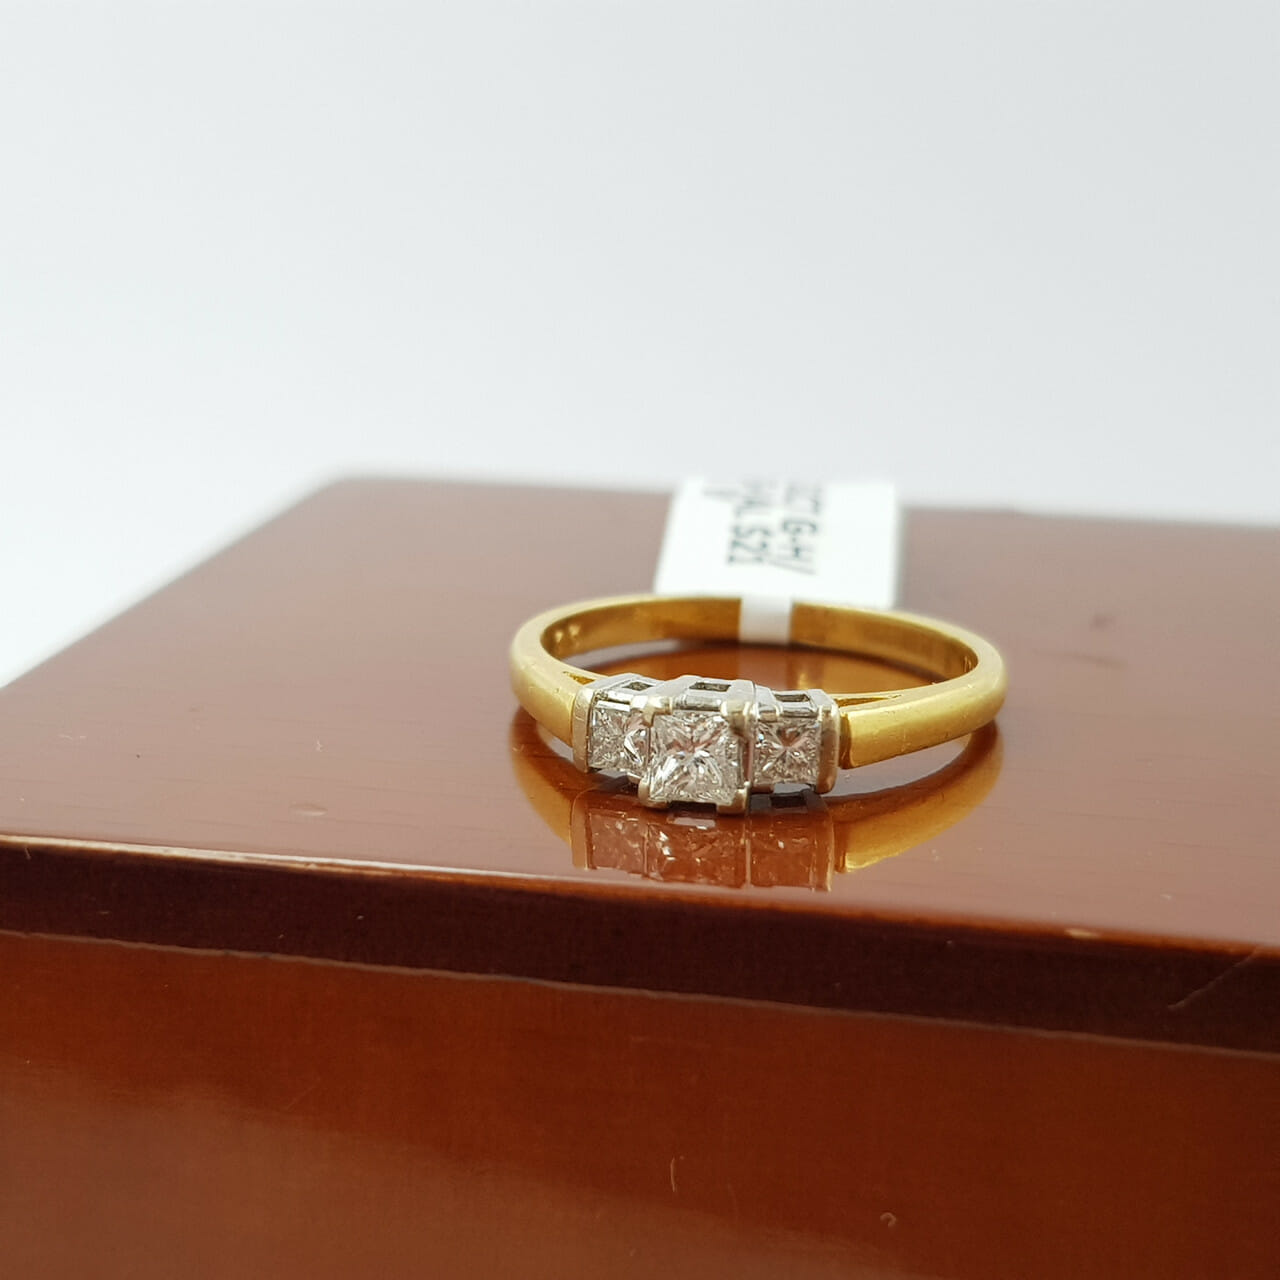 18CT TWO TONE GOLD 0.32CT TDW PRINCESS DIAMOND RING VAL $2175 SIZE M #54029